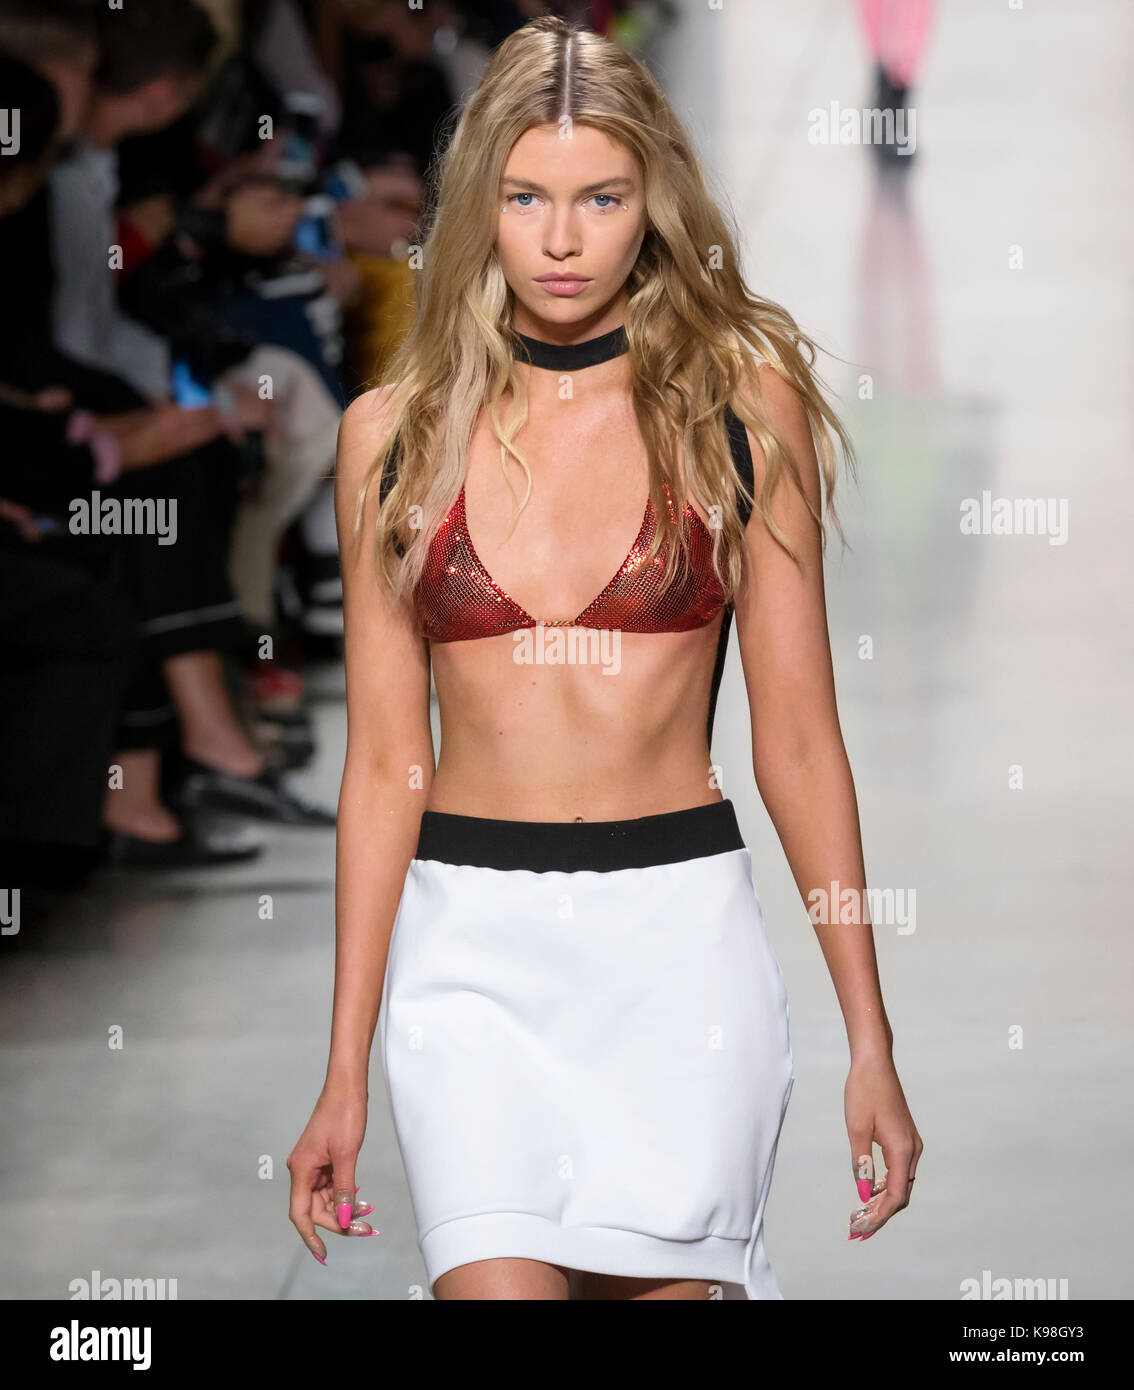 New York, NY - 08 septembre 2017 : stella maxwell promenades la piste au Jeremy Scott spring summer 2018 Fashion show fashion week de new york Banque D'Images